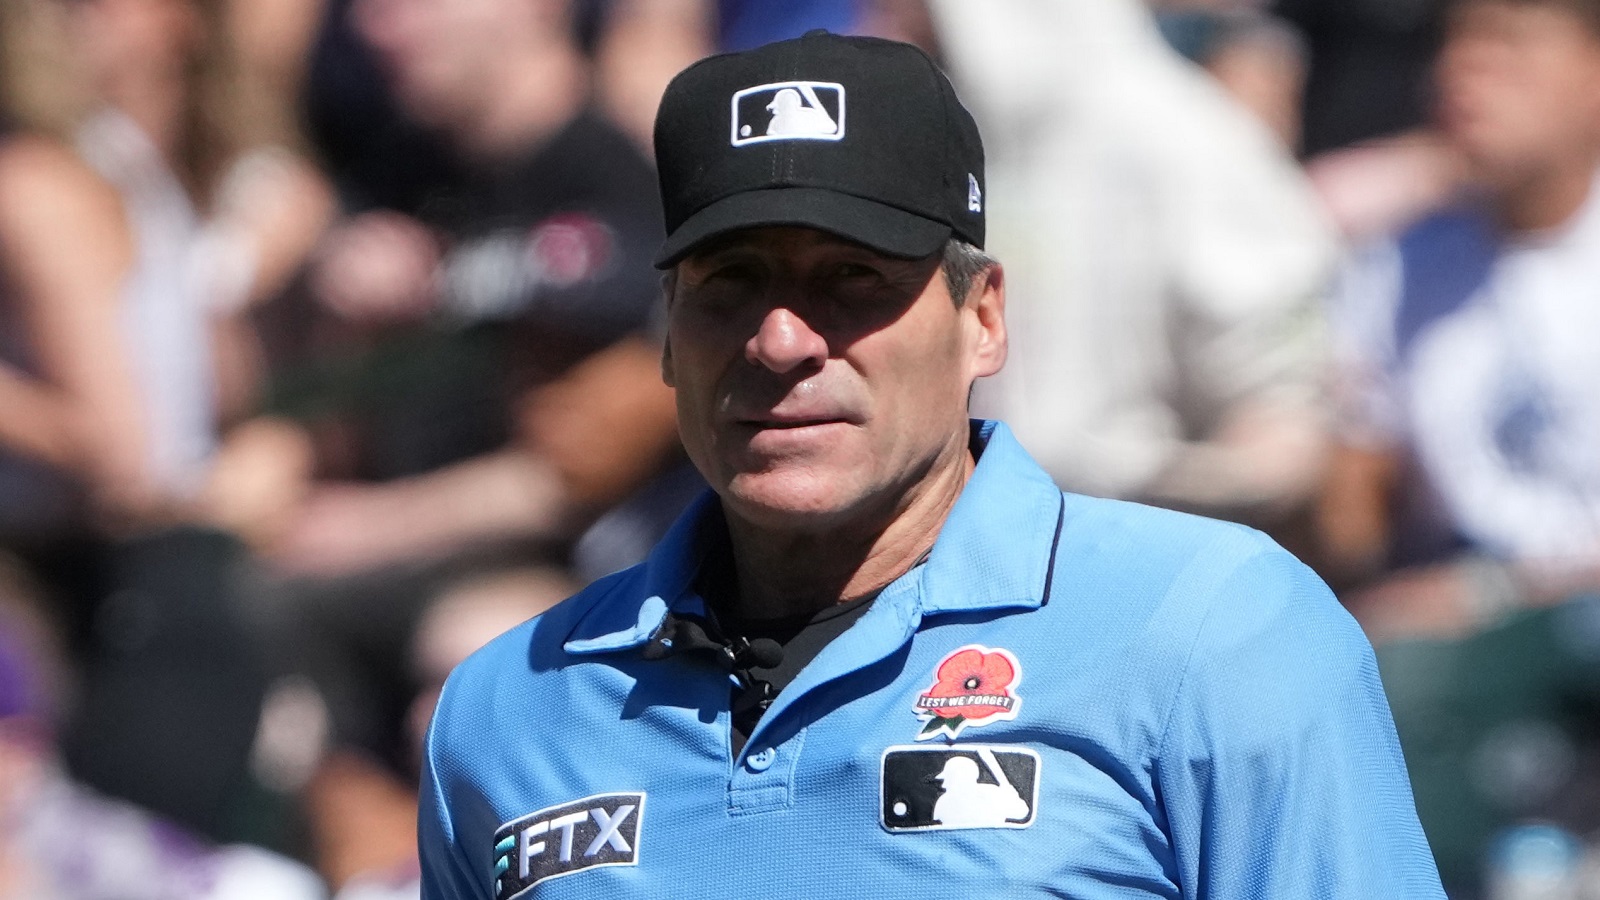 Angel Hernandez loses appeal of discrimination lawsuit against MLB